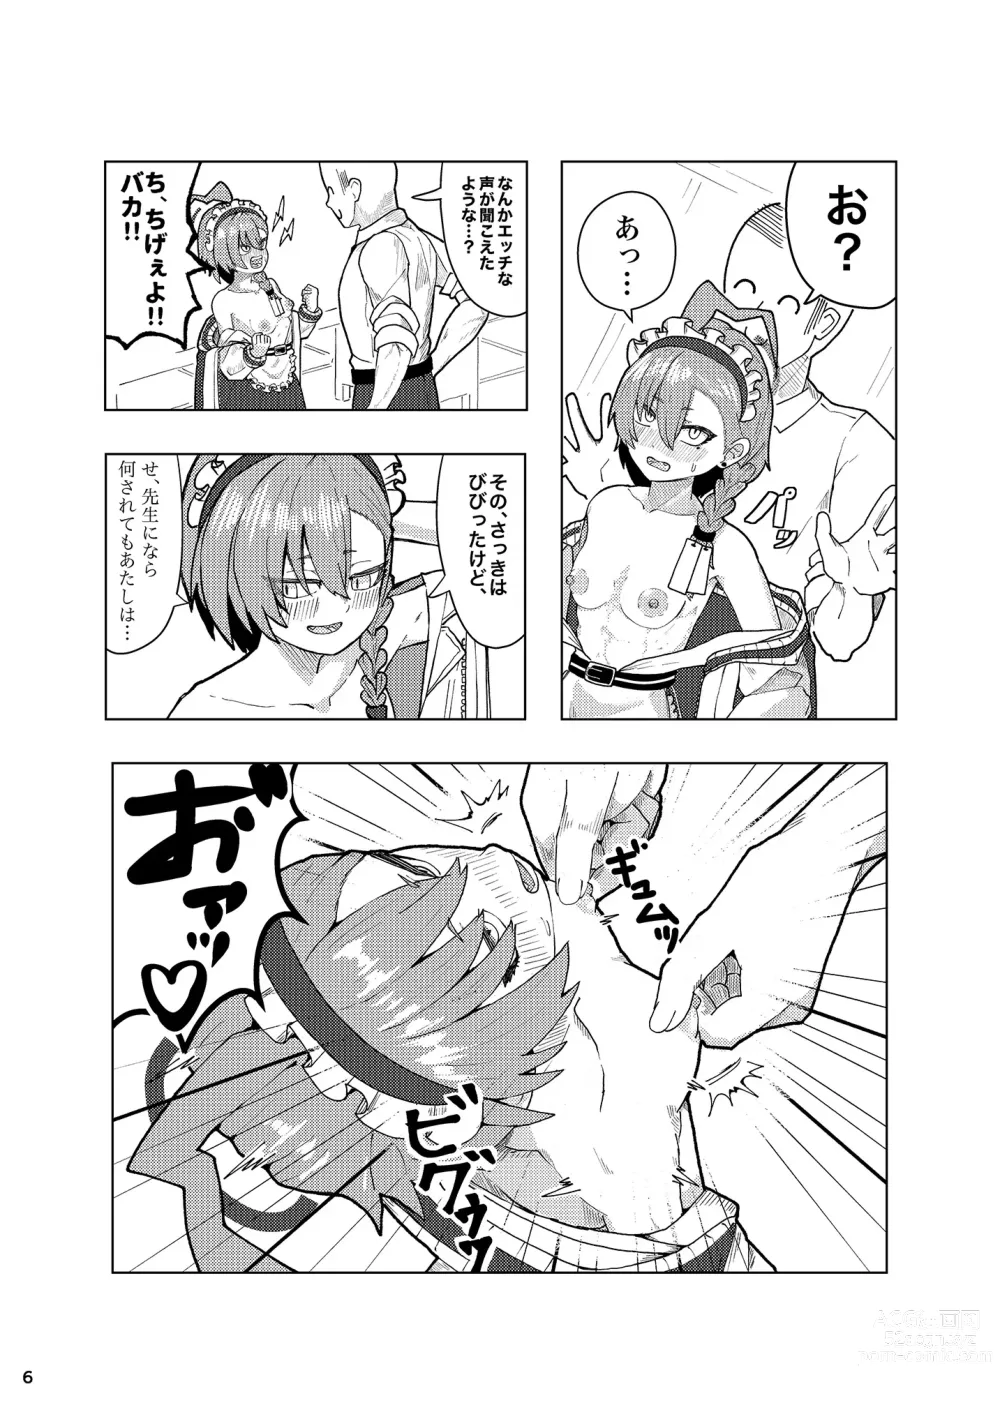 Page 6 of doujinshi Neru Ecchi